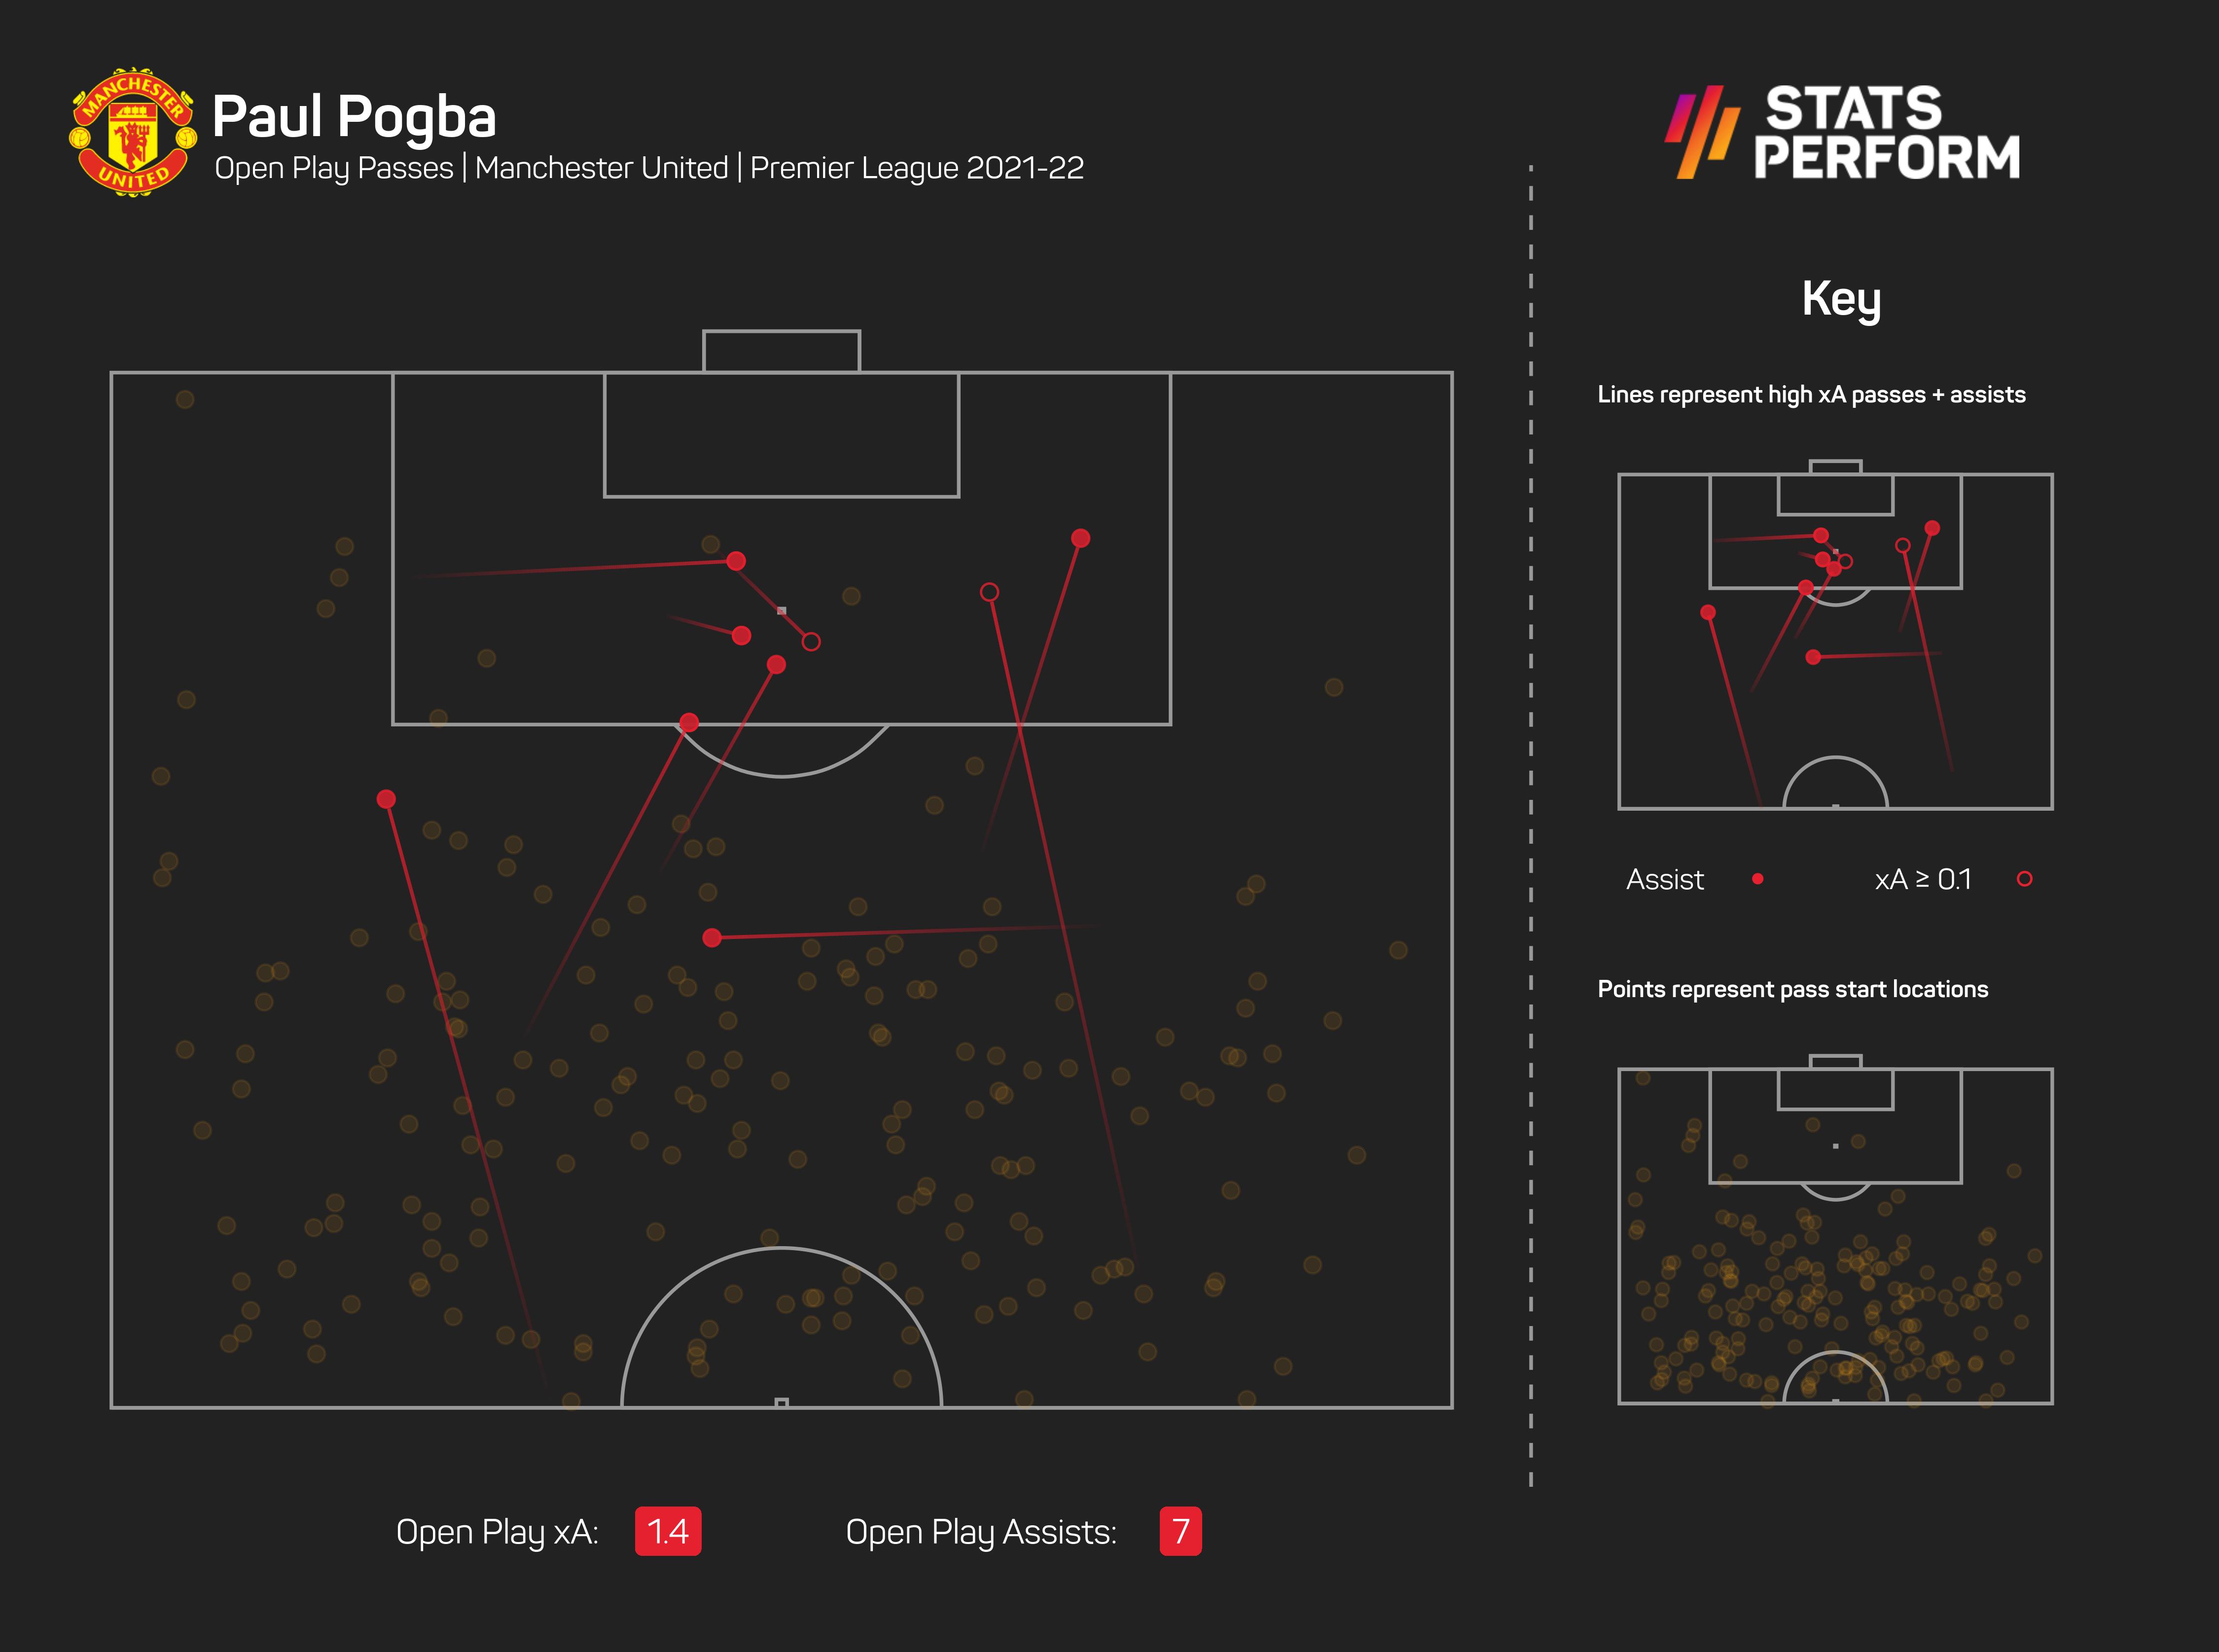 Paul Pogba has seven assists already this season